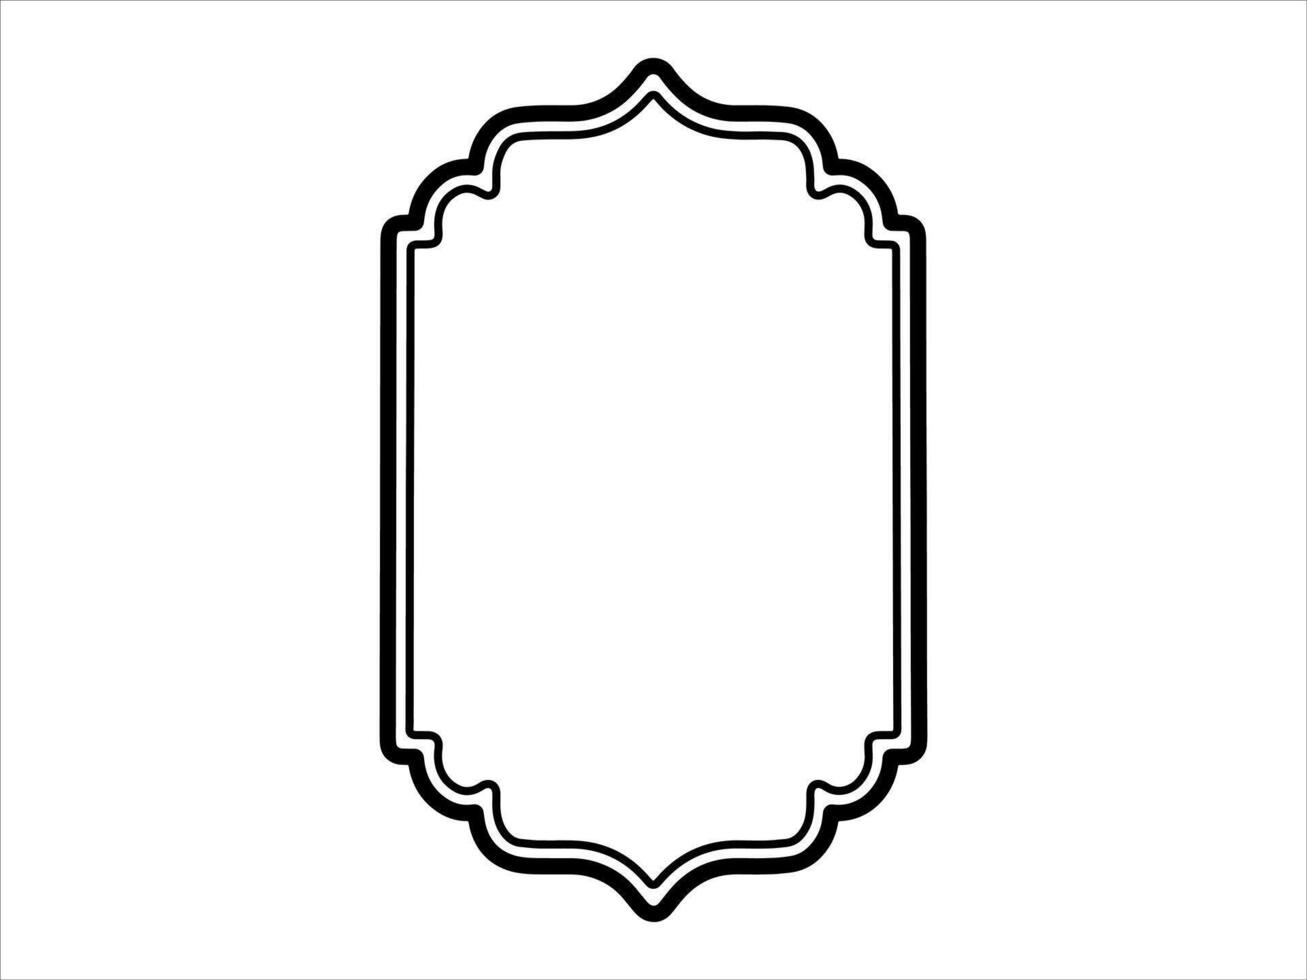 Rahmen Ramadan Mubarak schwarz und Weiß vektor